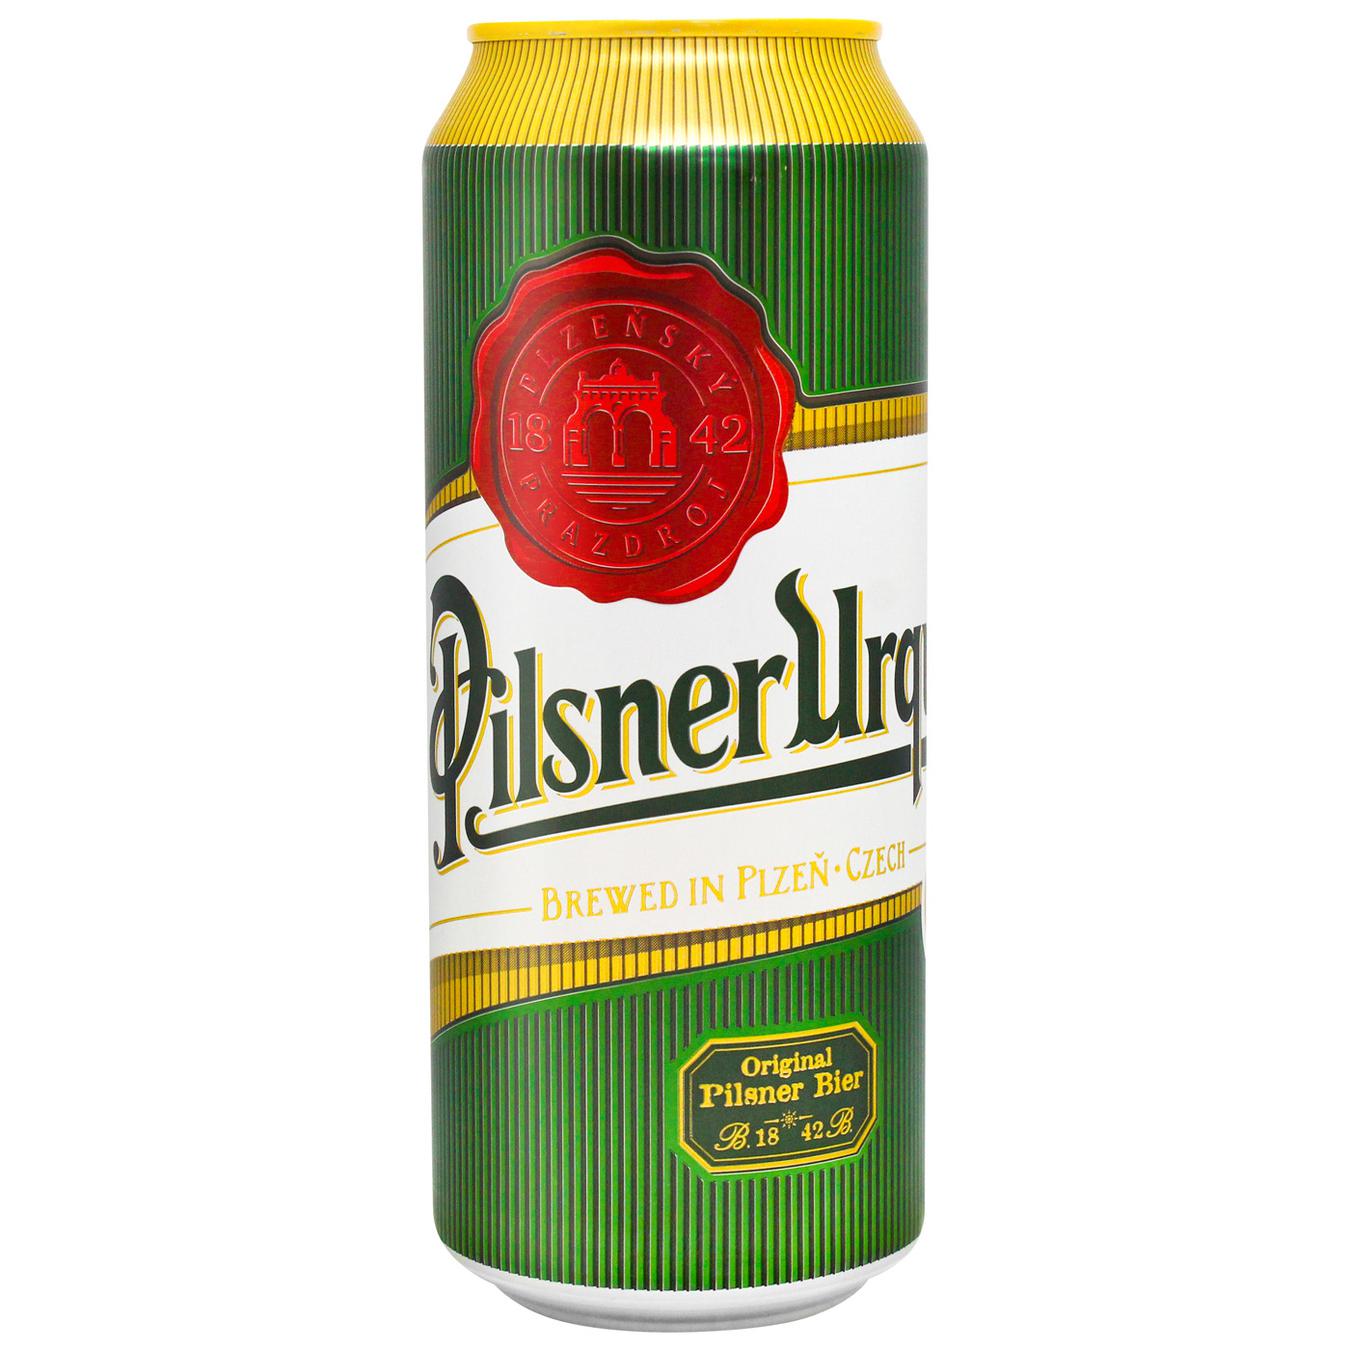 Light beer Pilsner Urguell 4.4% 0.5 l iron can